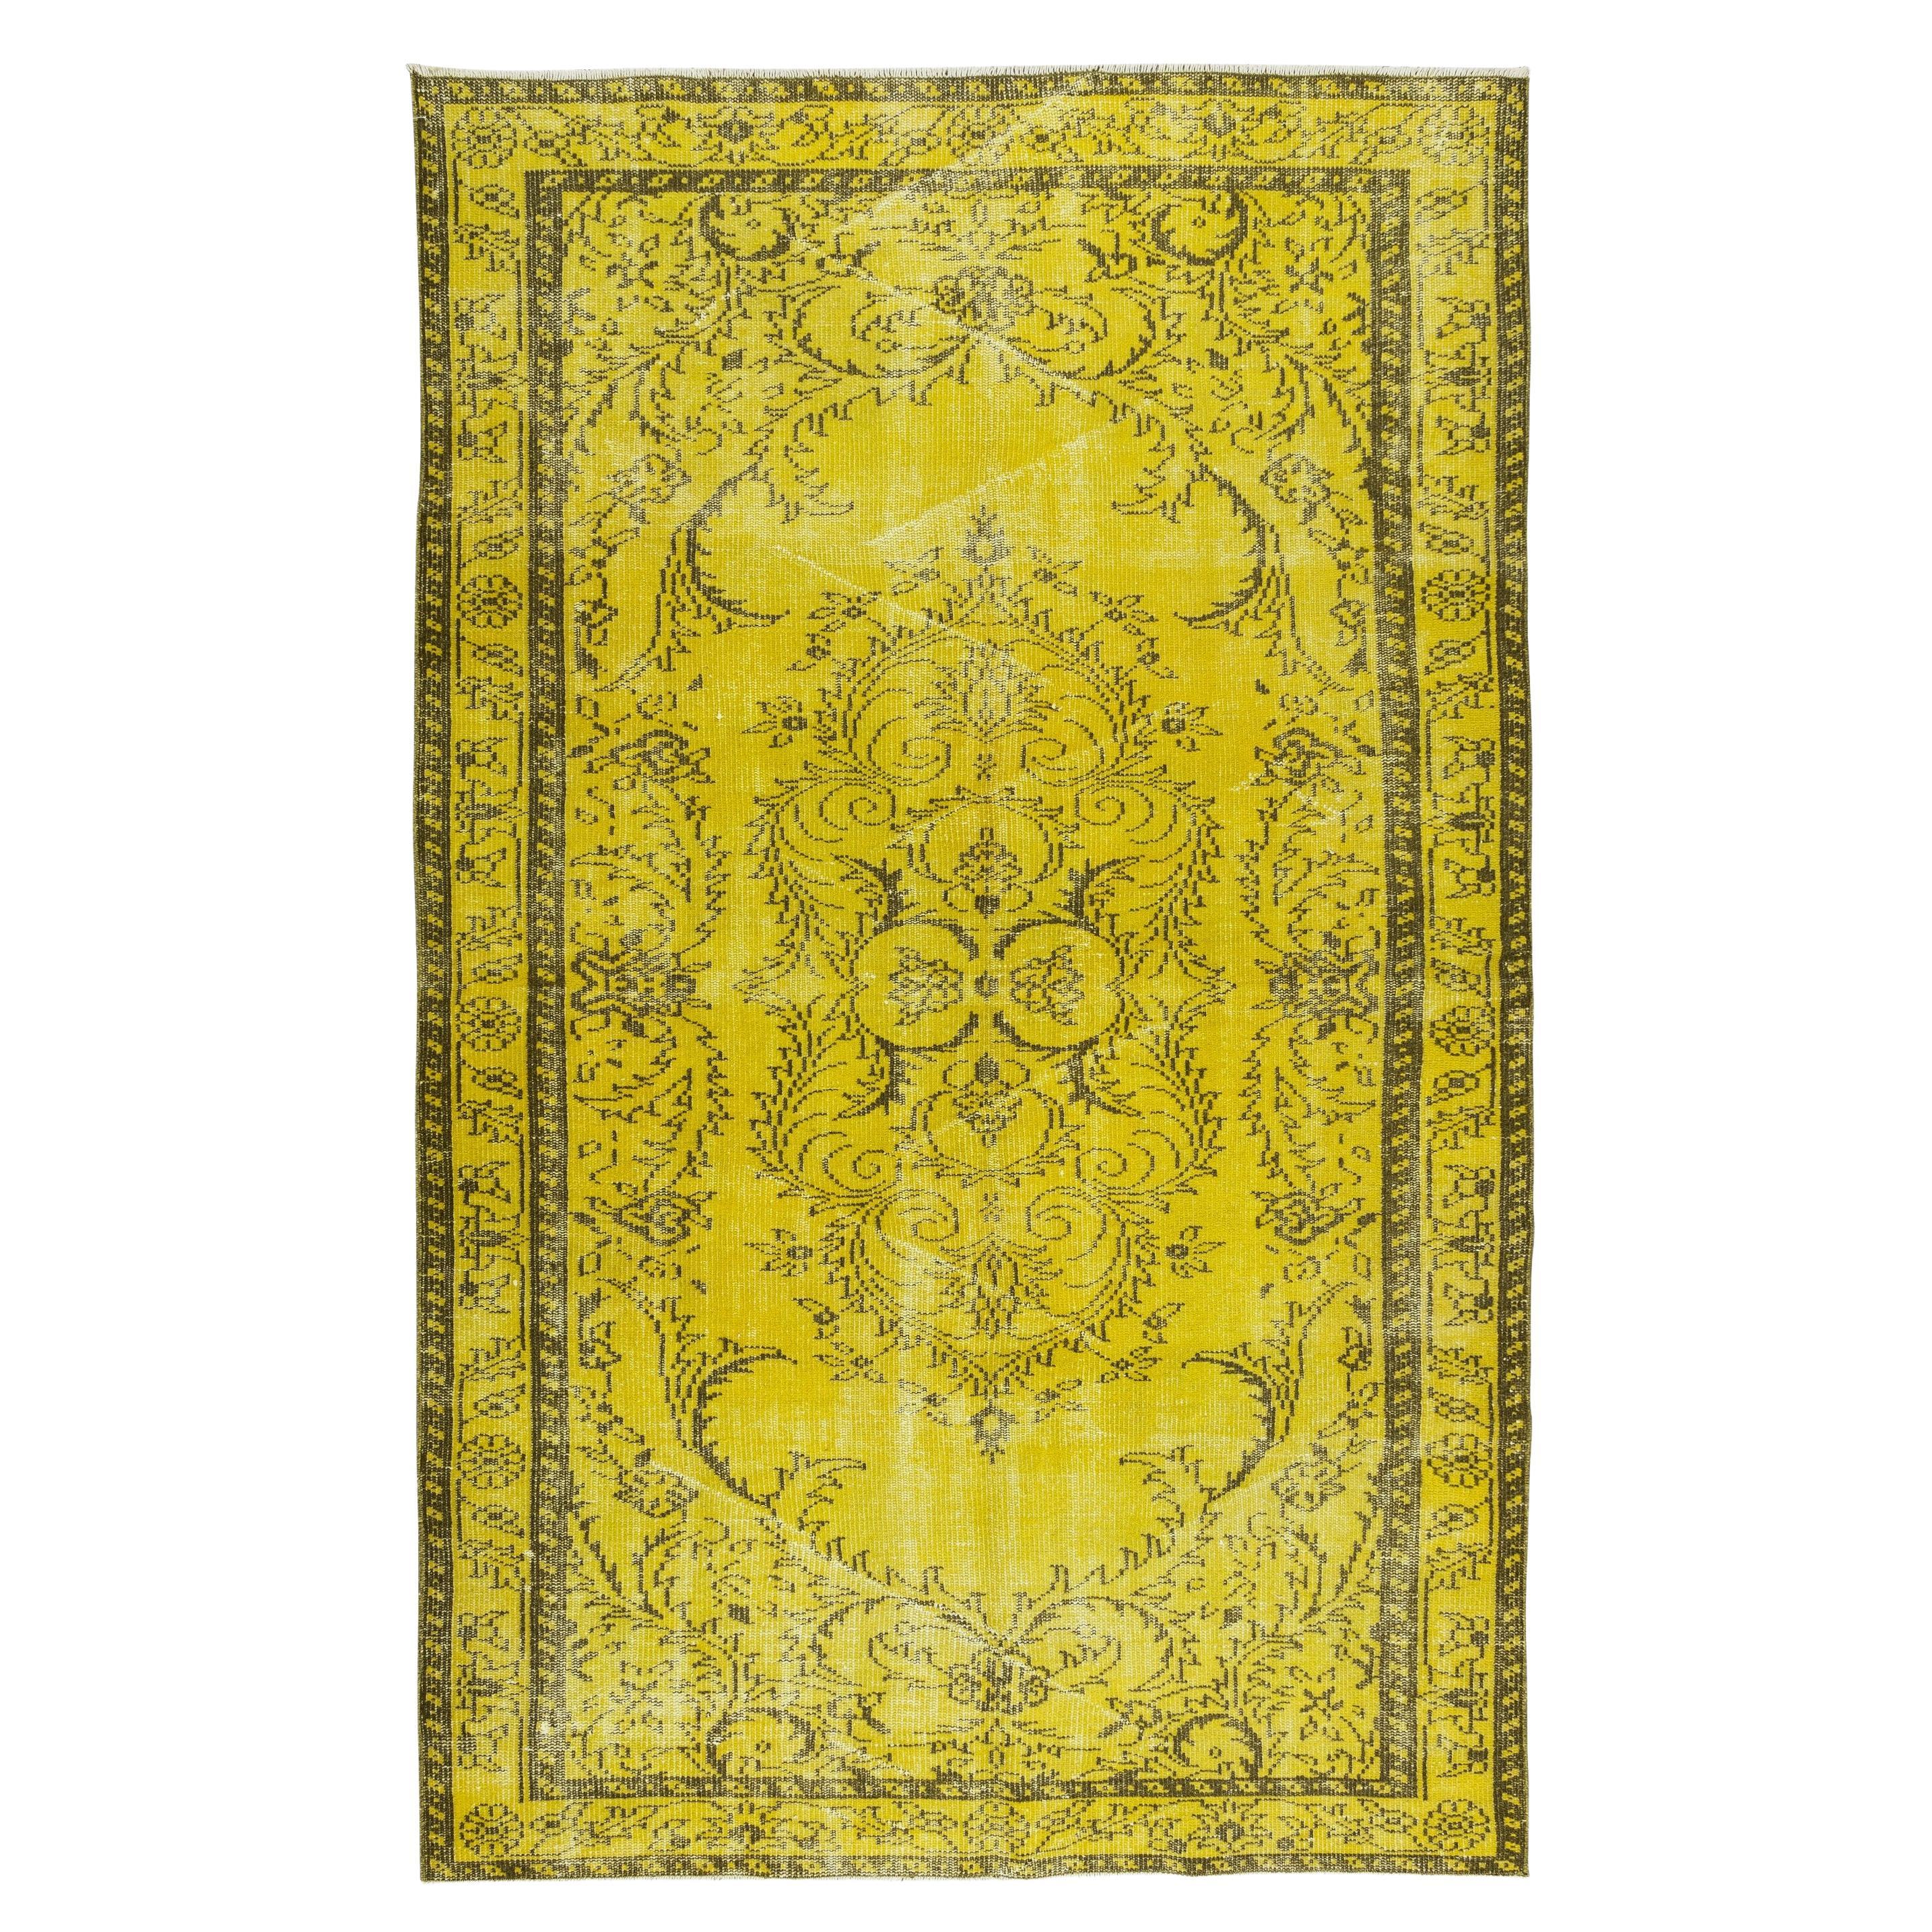 5.4x8.9 Ft Medallion Pattern Yellow Over-dyed Rug, 1960s Turkish Handmade Carpet